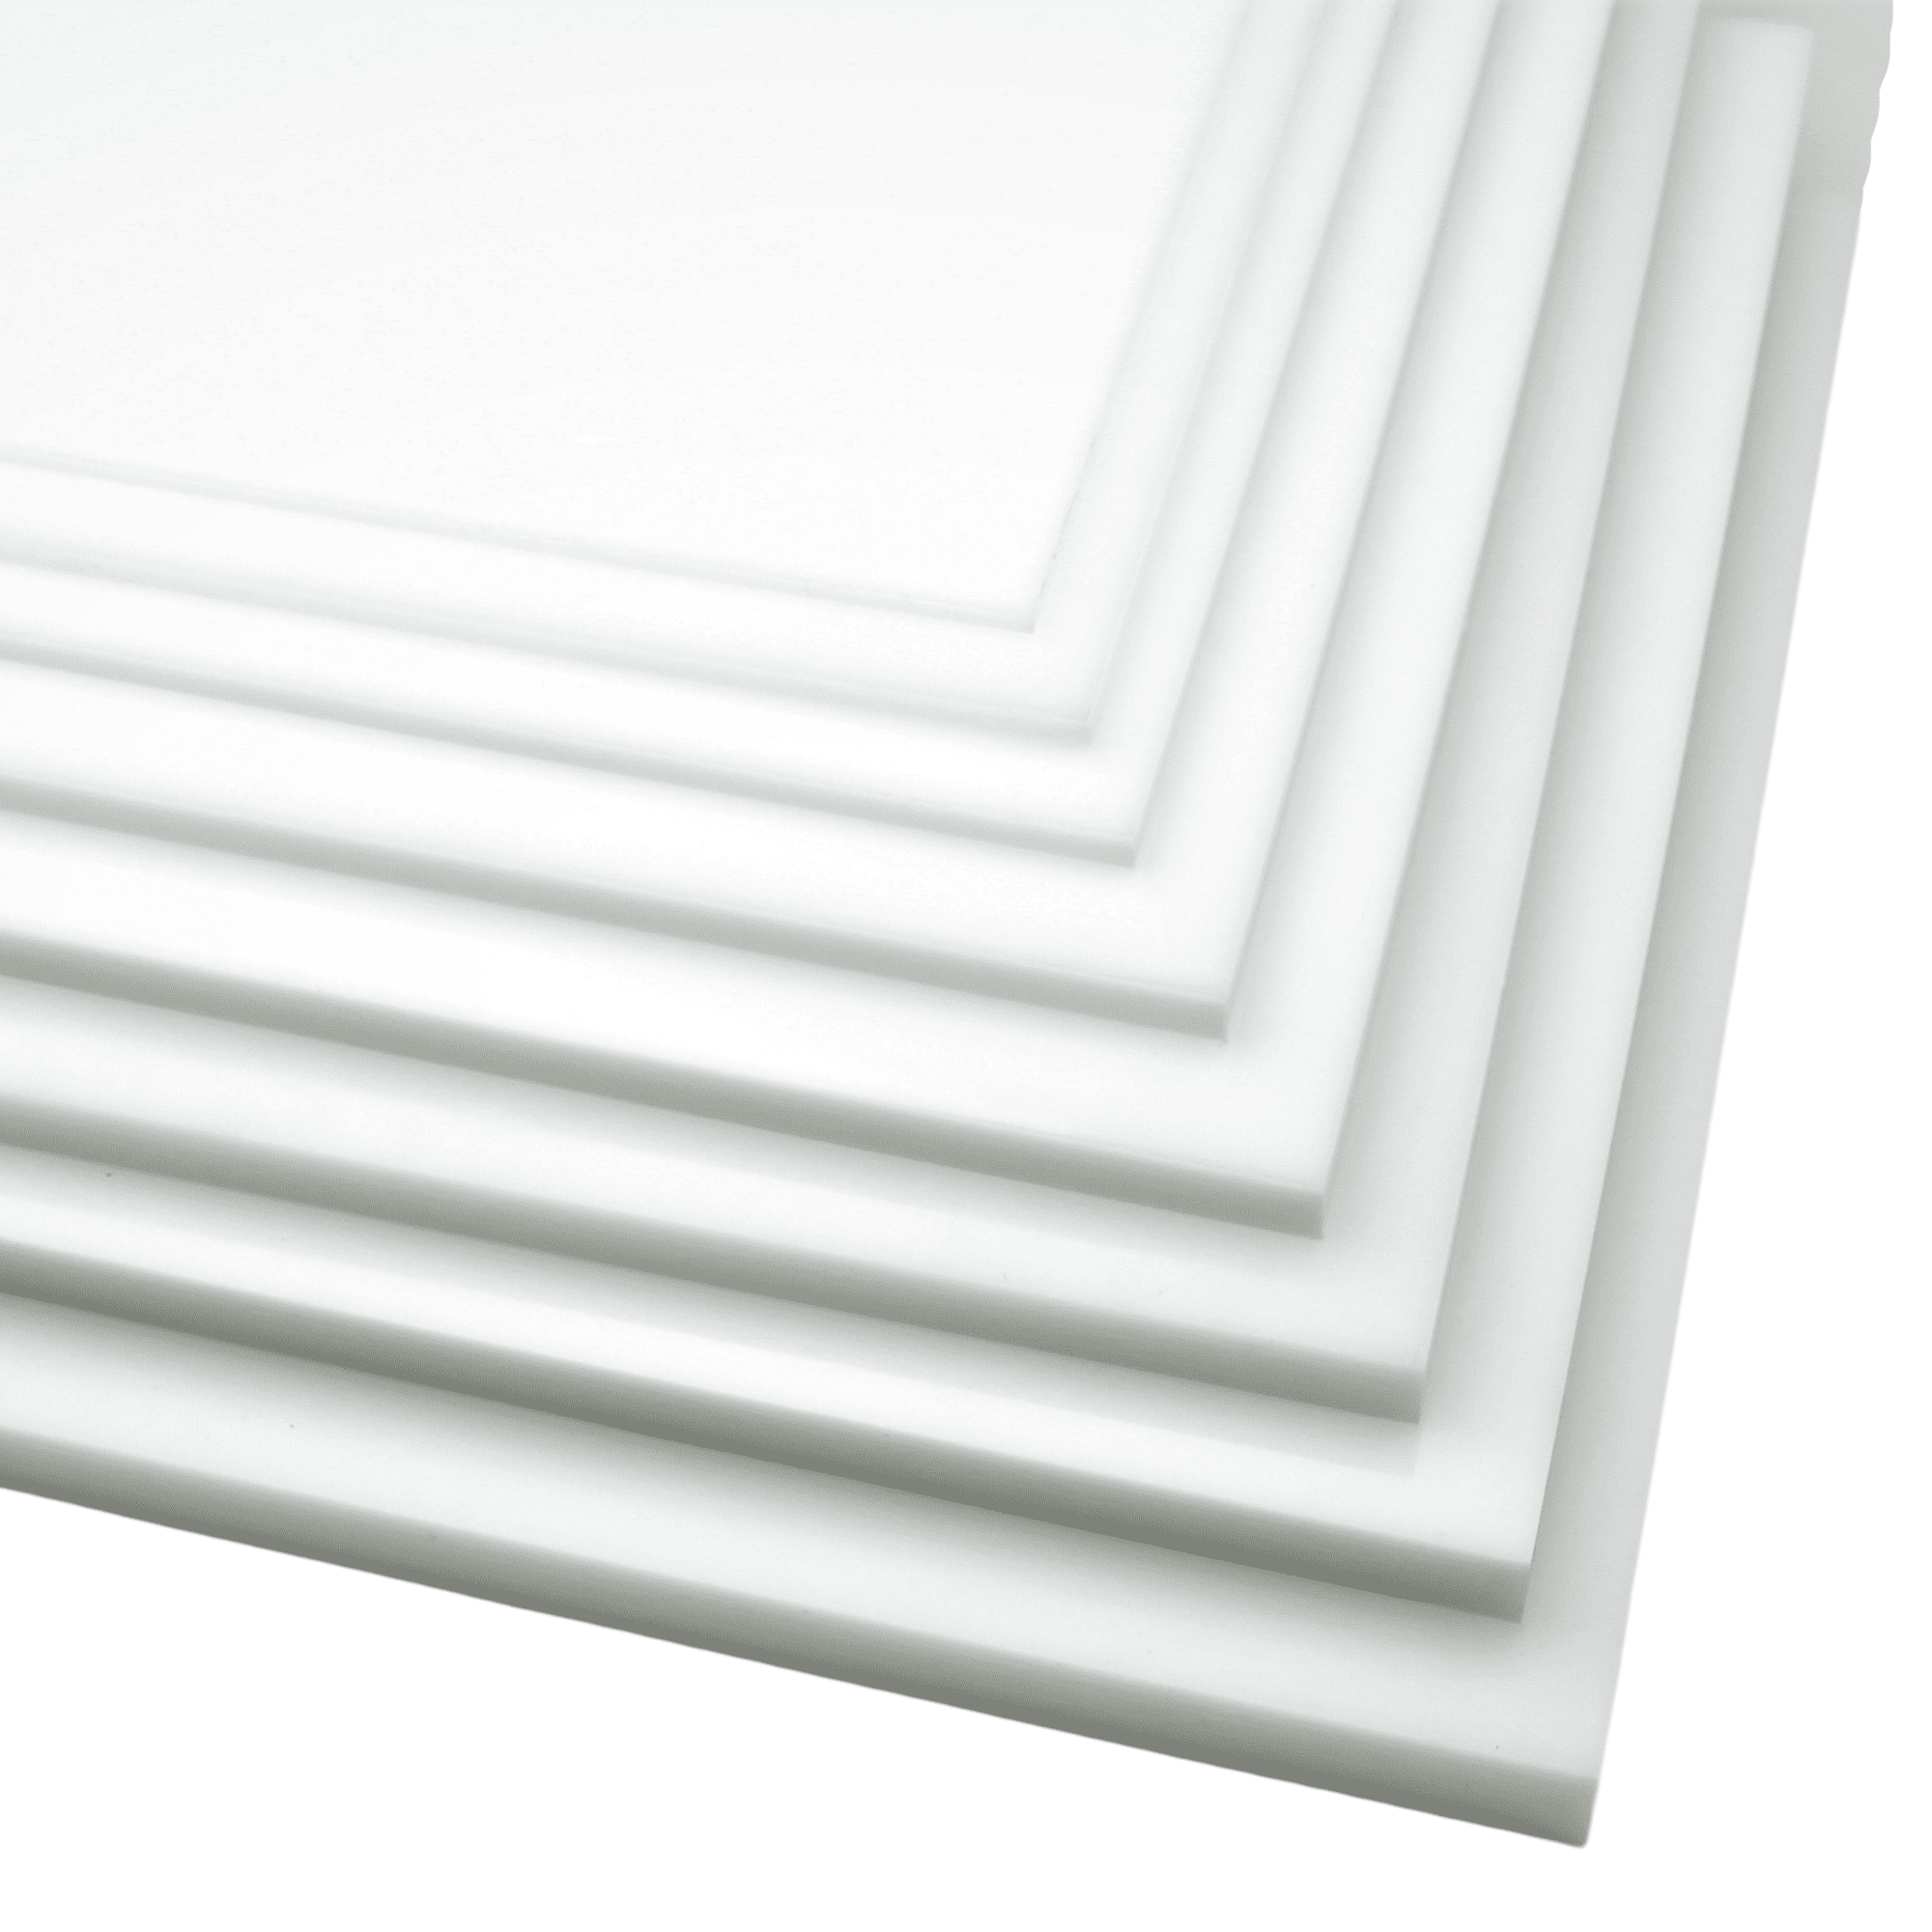 Plastic Sheet 1/4" x 24" x 48” White Smooth HDPE High Density Polyethylene